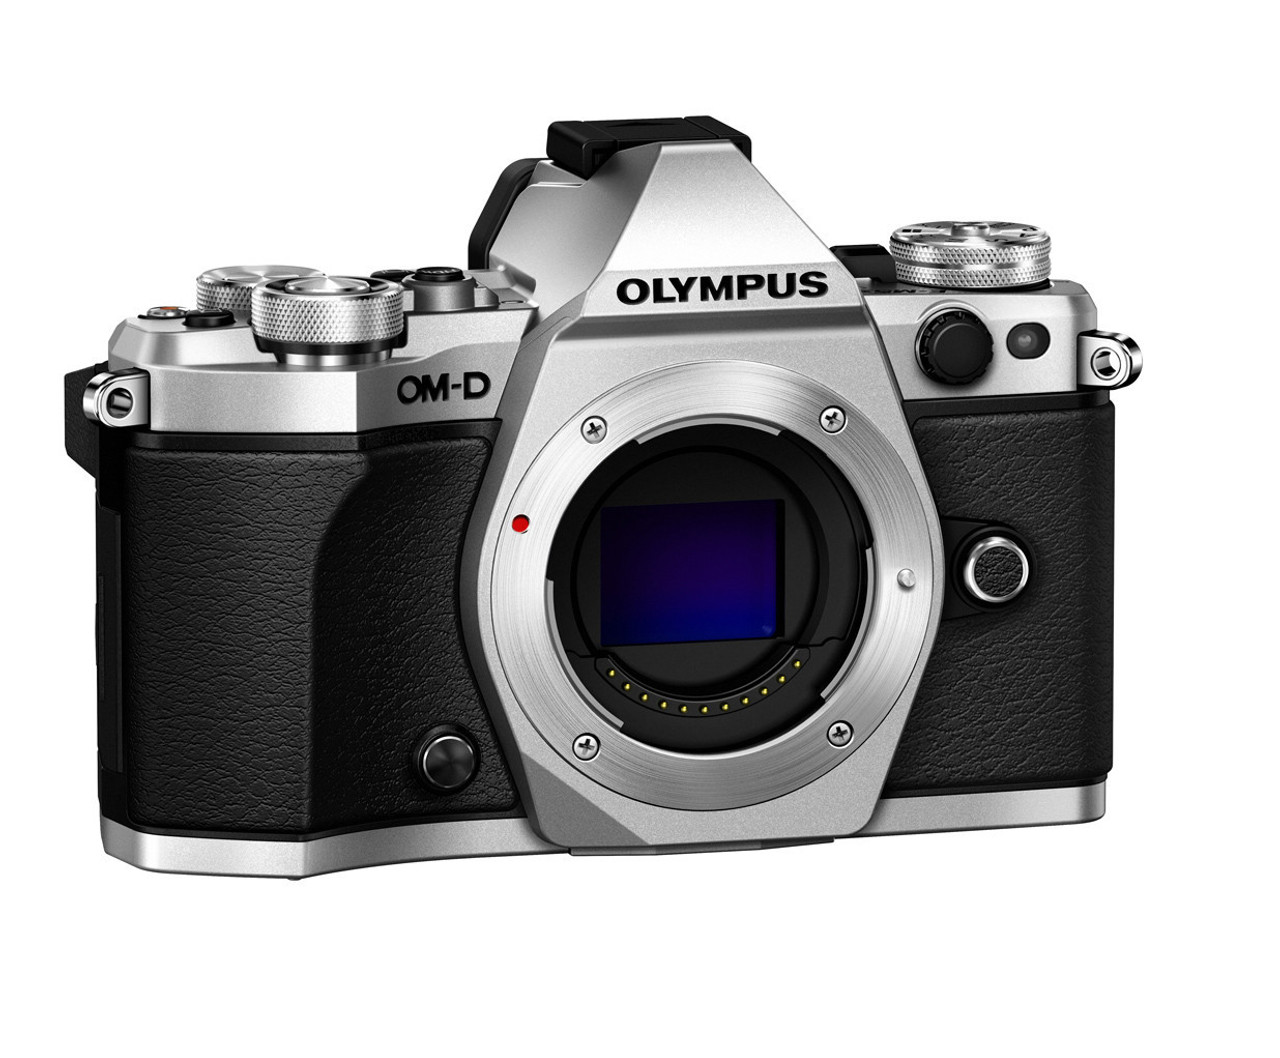 USED: Olympus OM-D E-M5 Mark II Camera